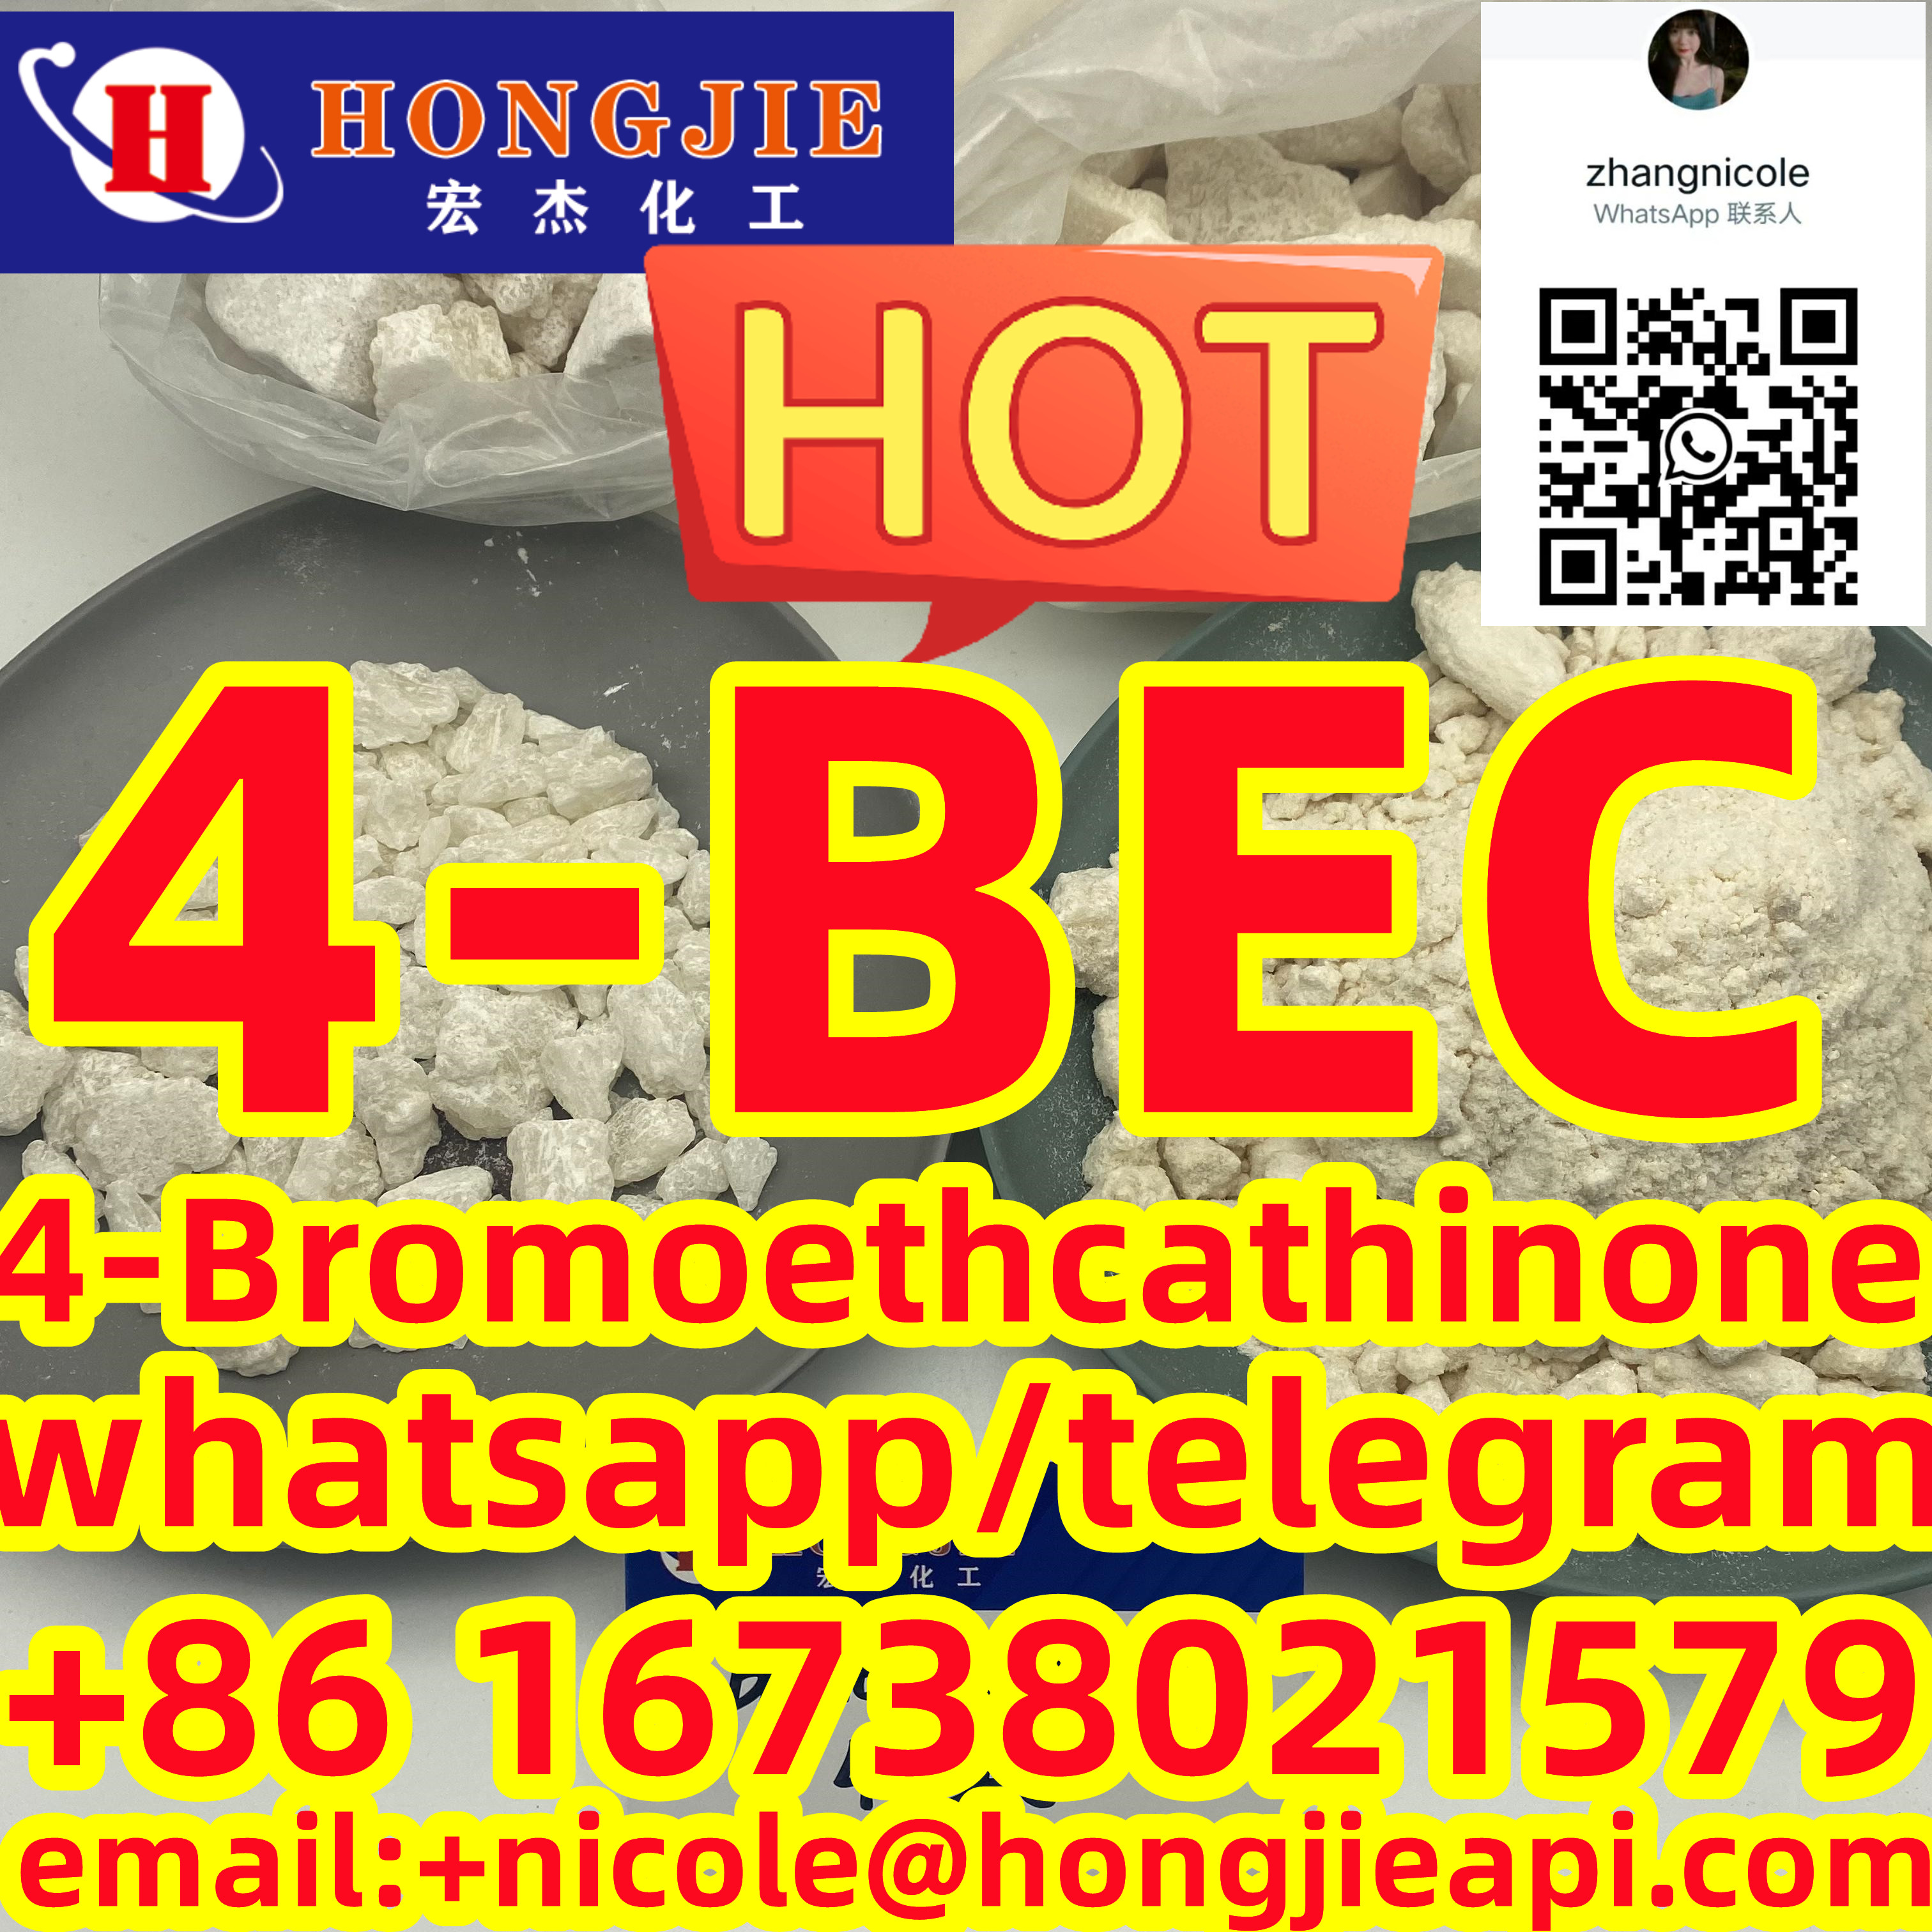 4-Bromoethcathinon 4-BEC